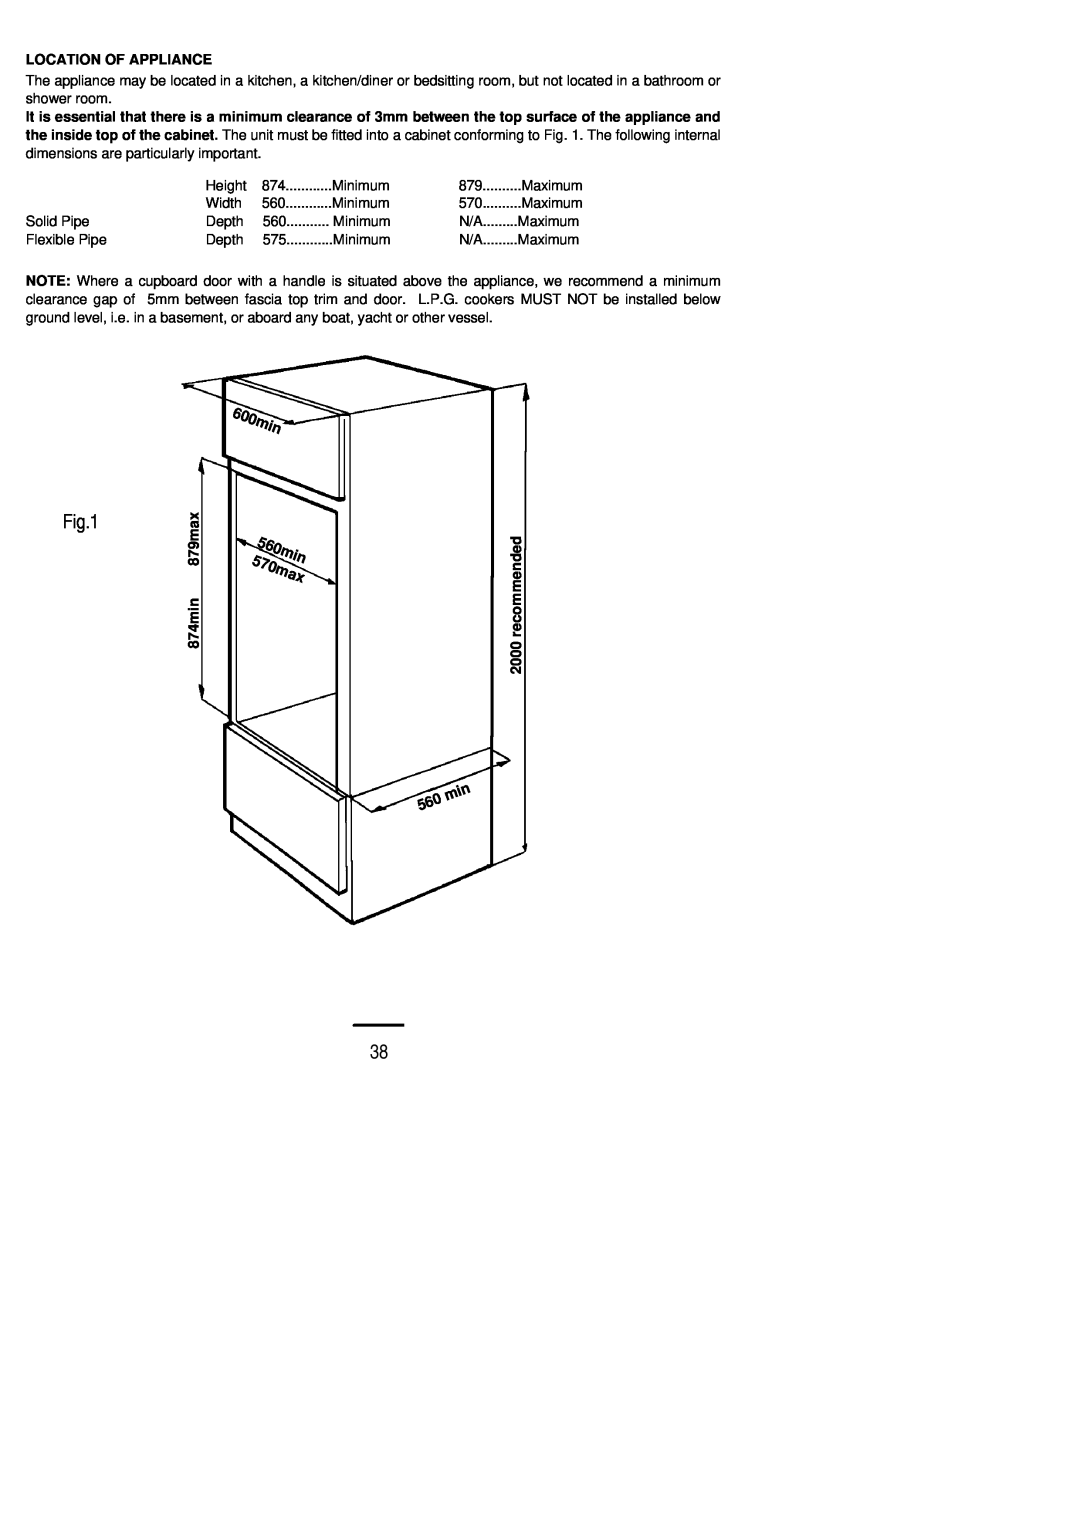 Zanussi ZDG 862 manual 600min, Location Of Appliance, 879max, 560min, 874min, recommended 